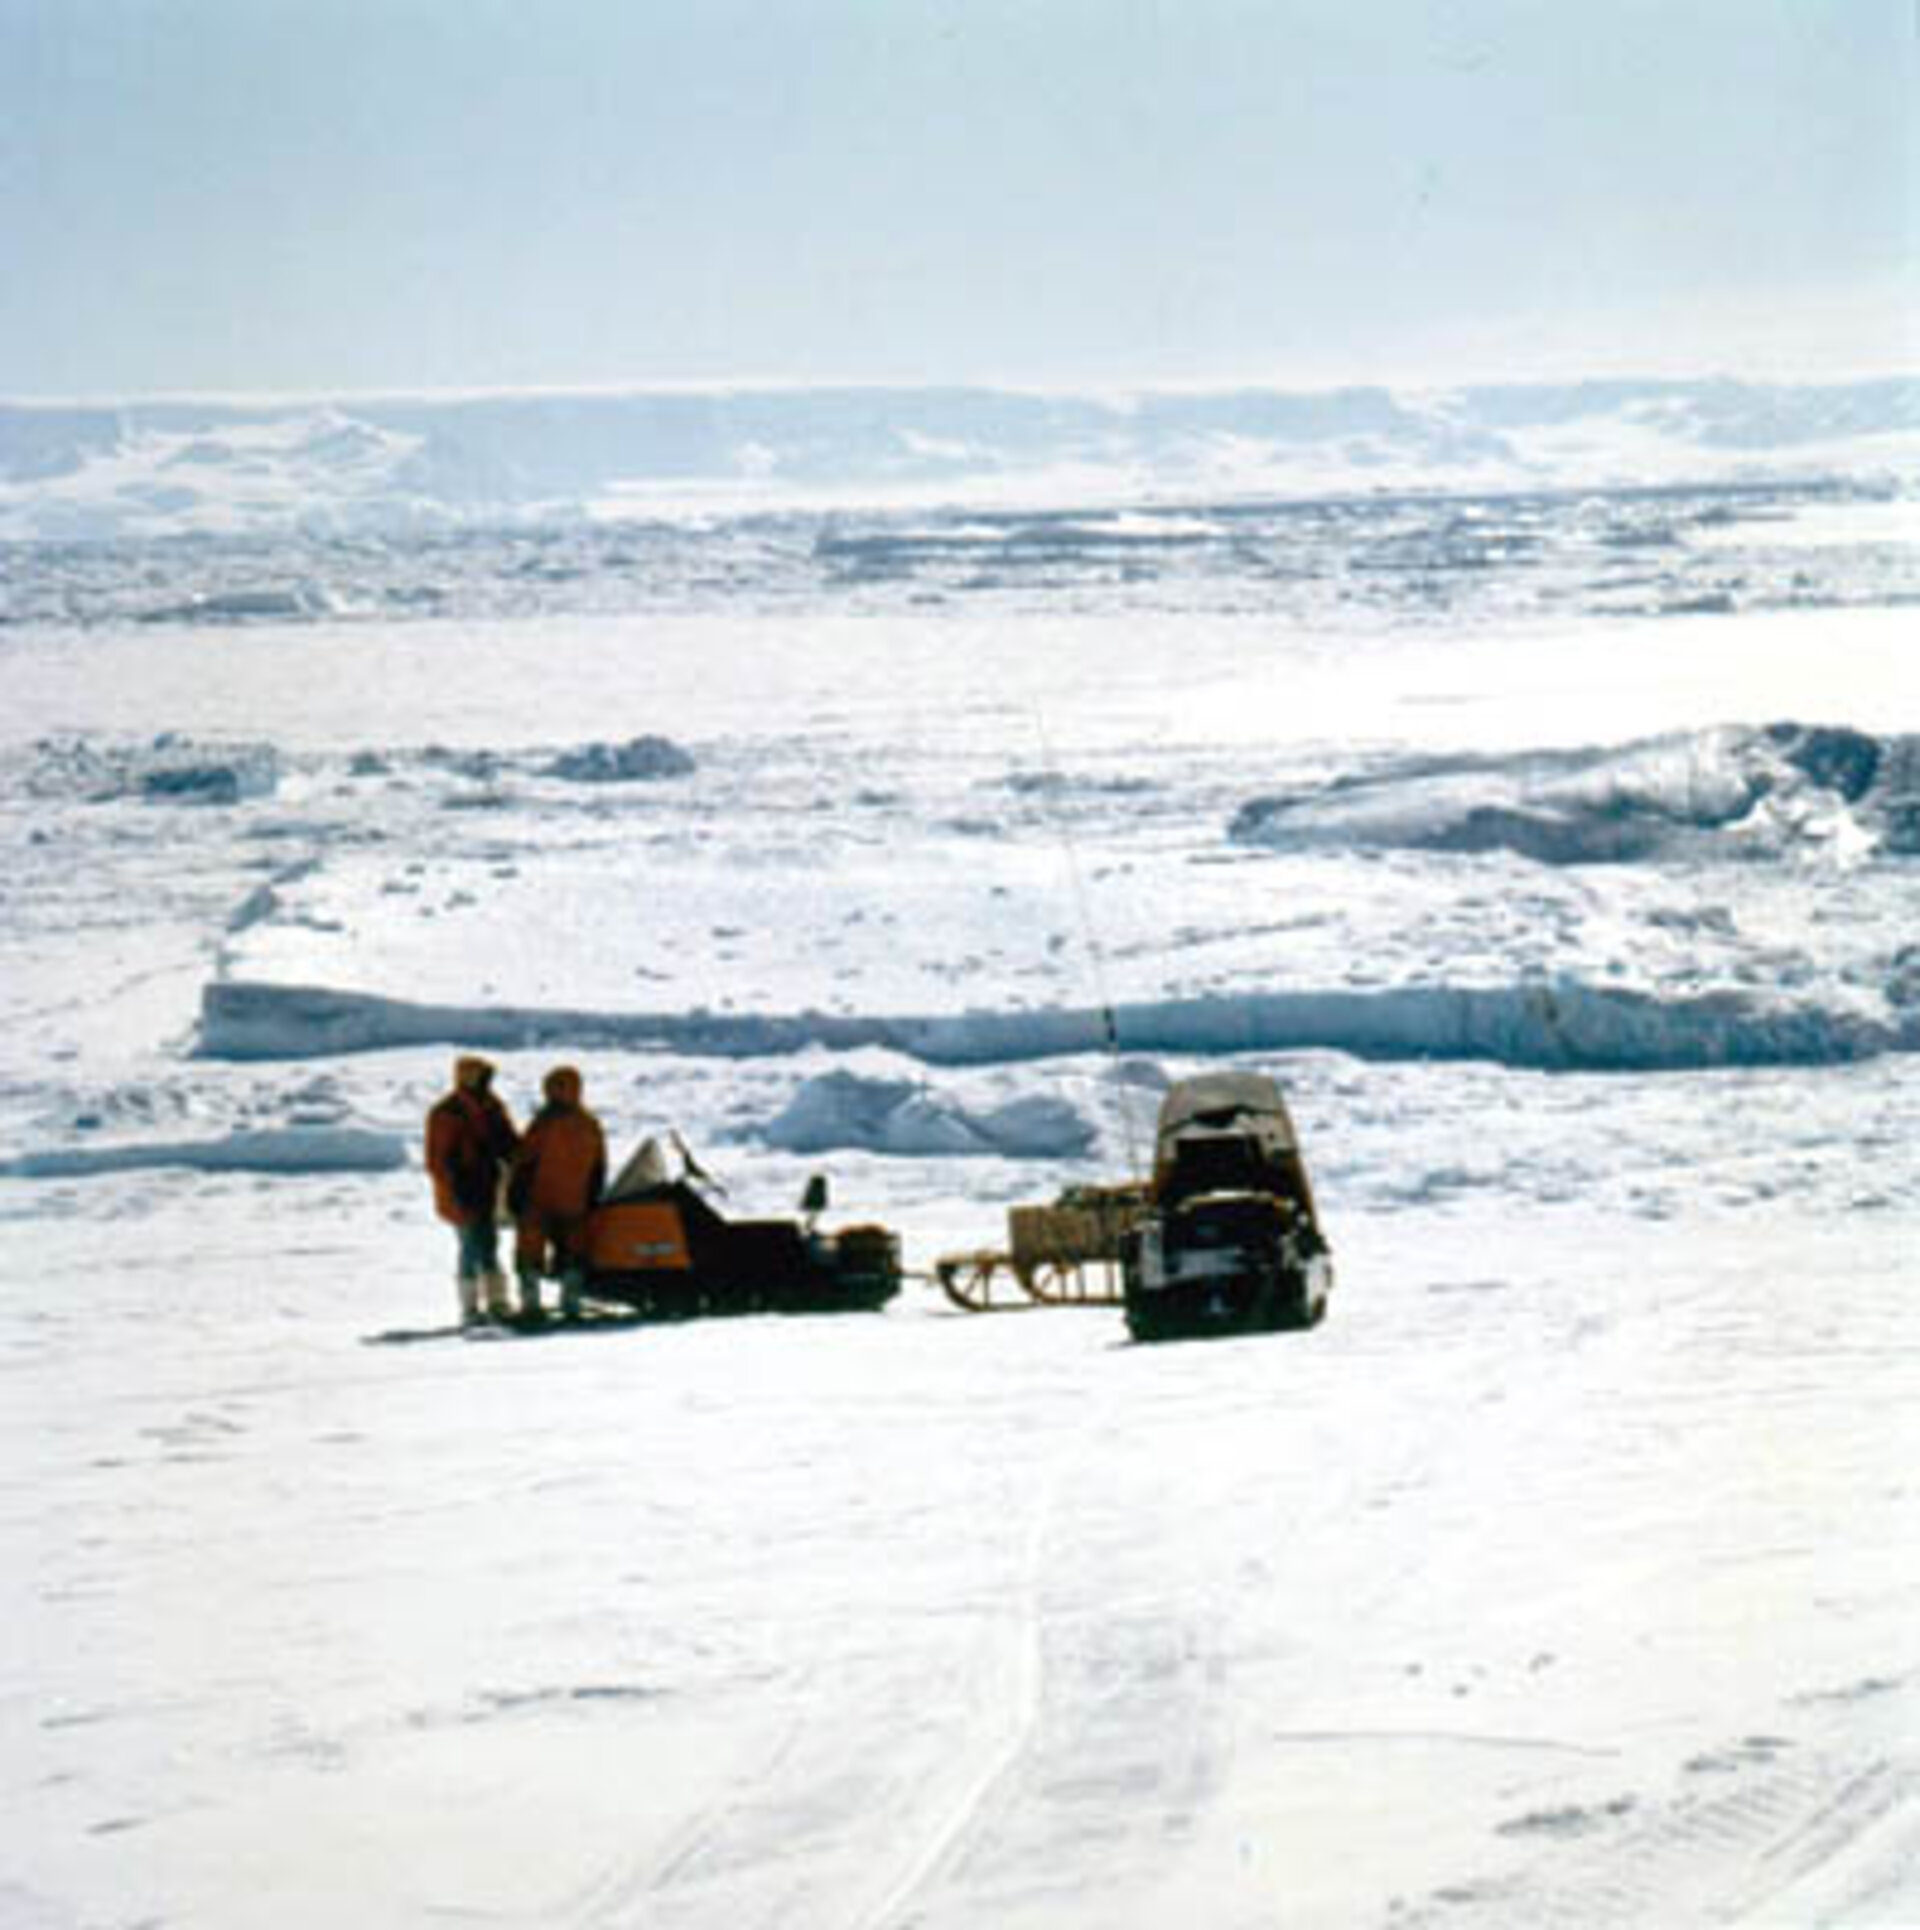 Larsen ice shelf